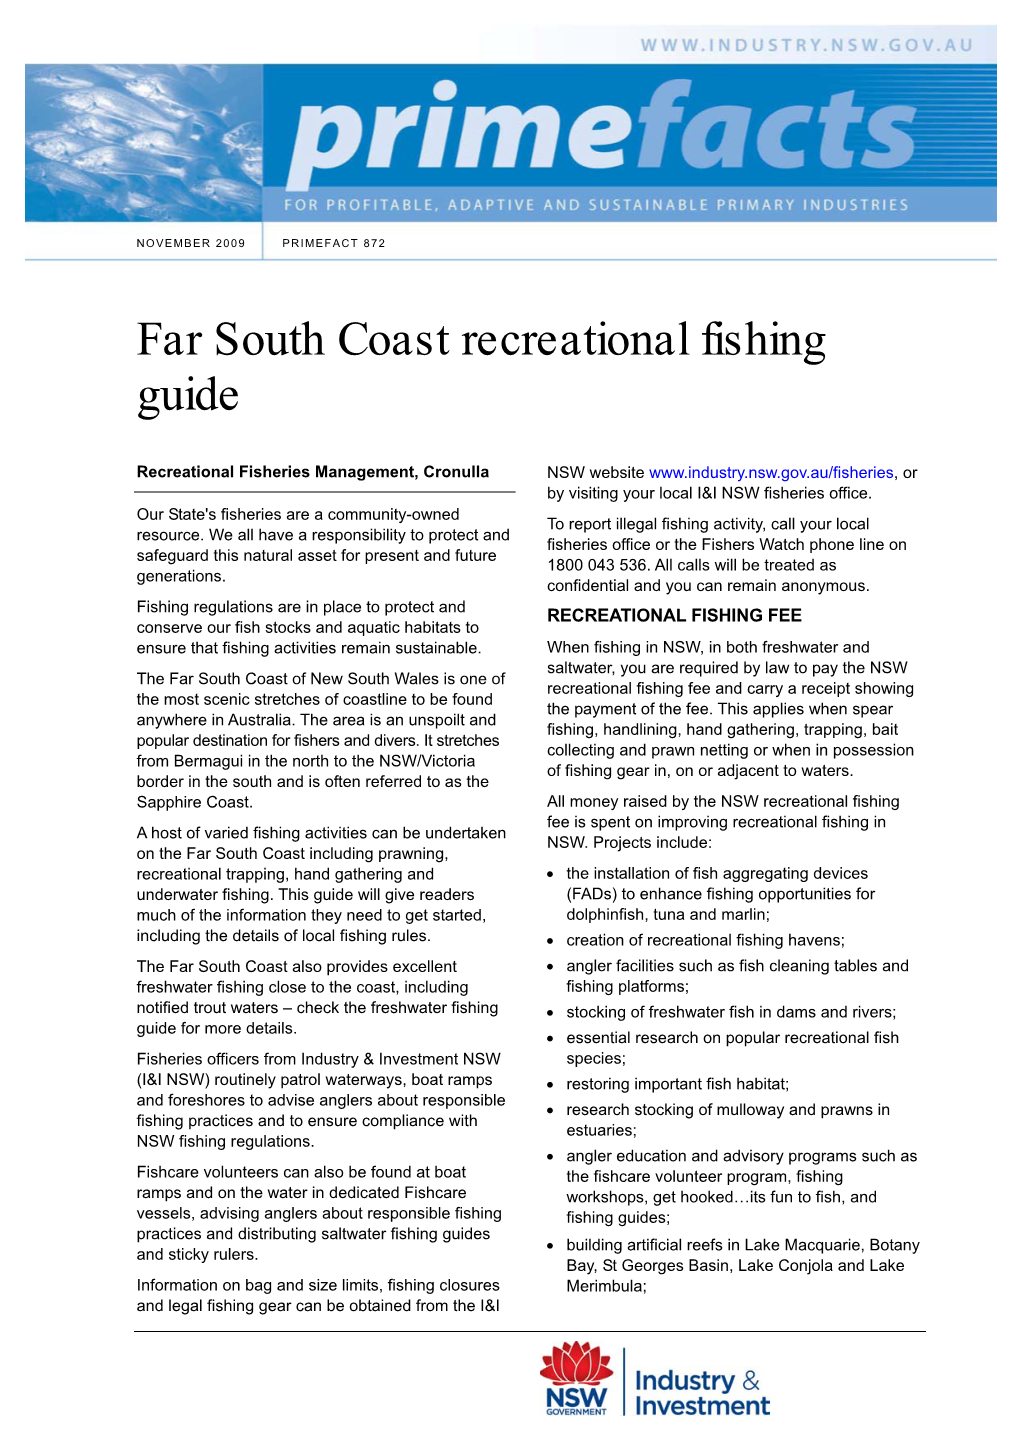 Far South Coast Recreational Fishing Guide